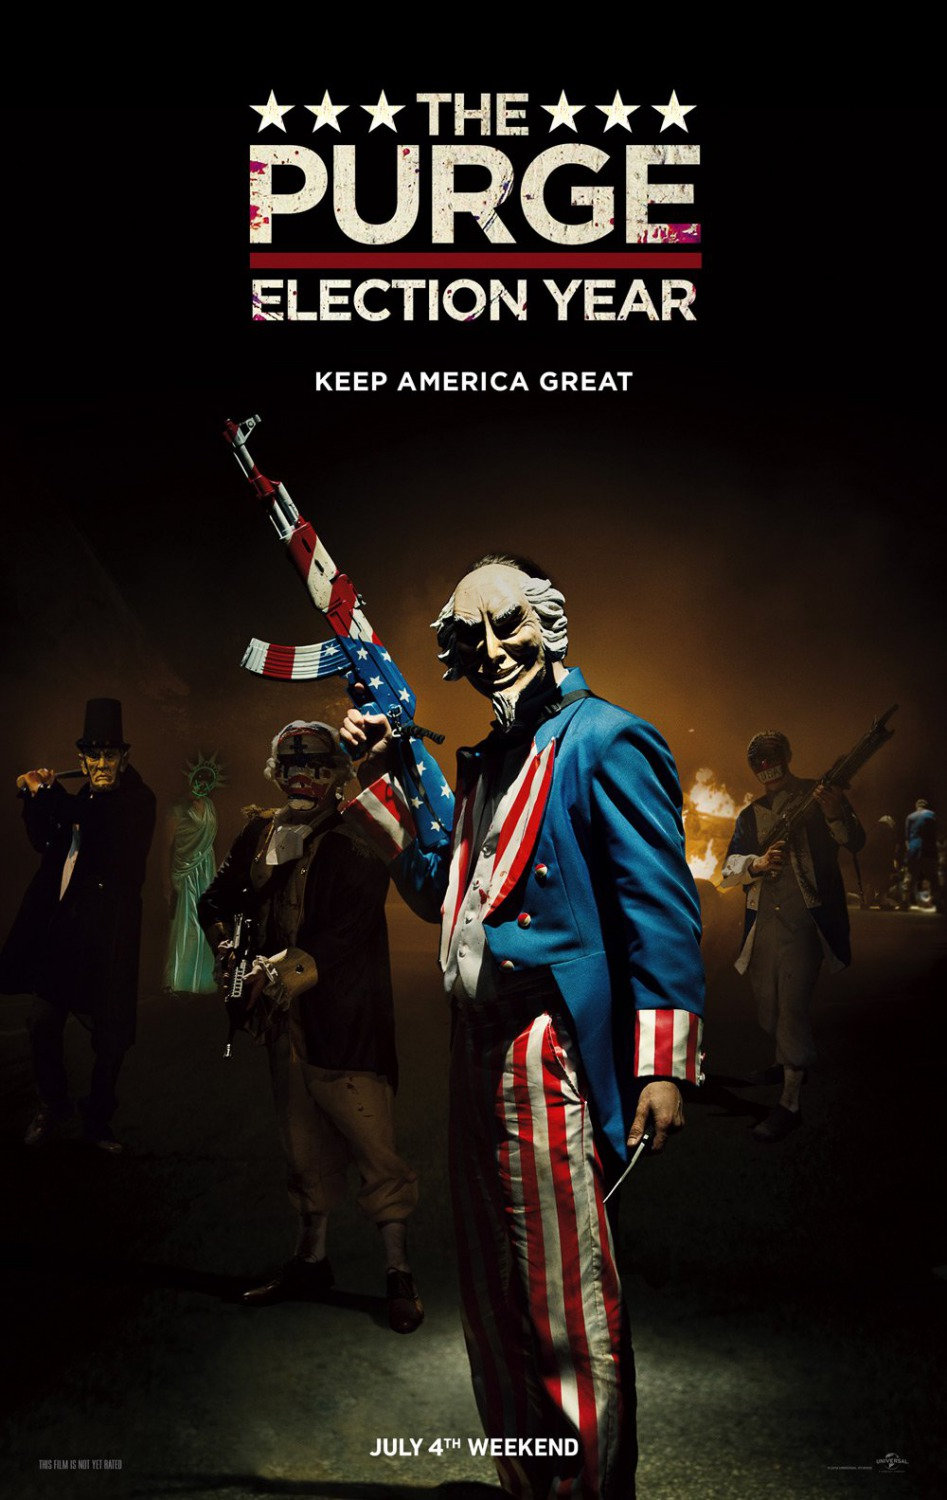 American Nightmare 3 : Elections